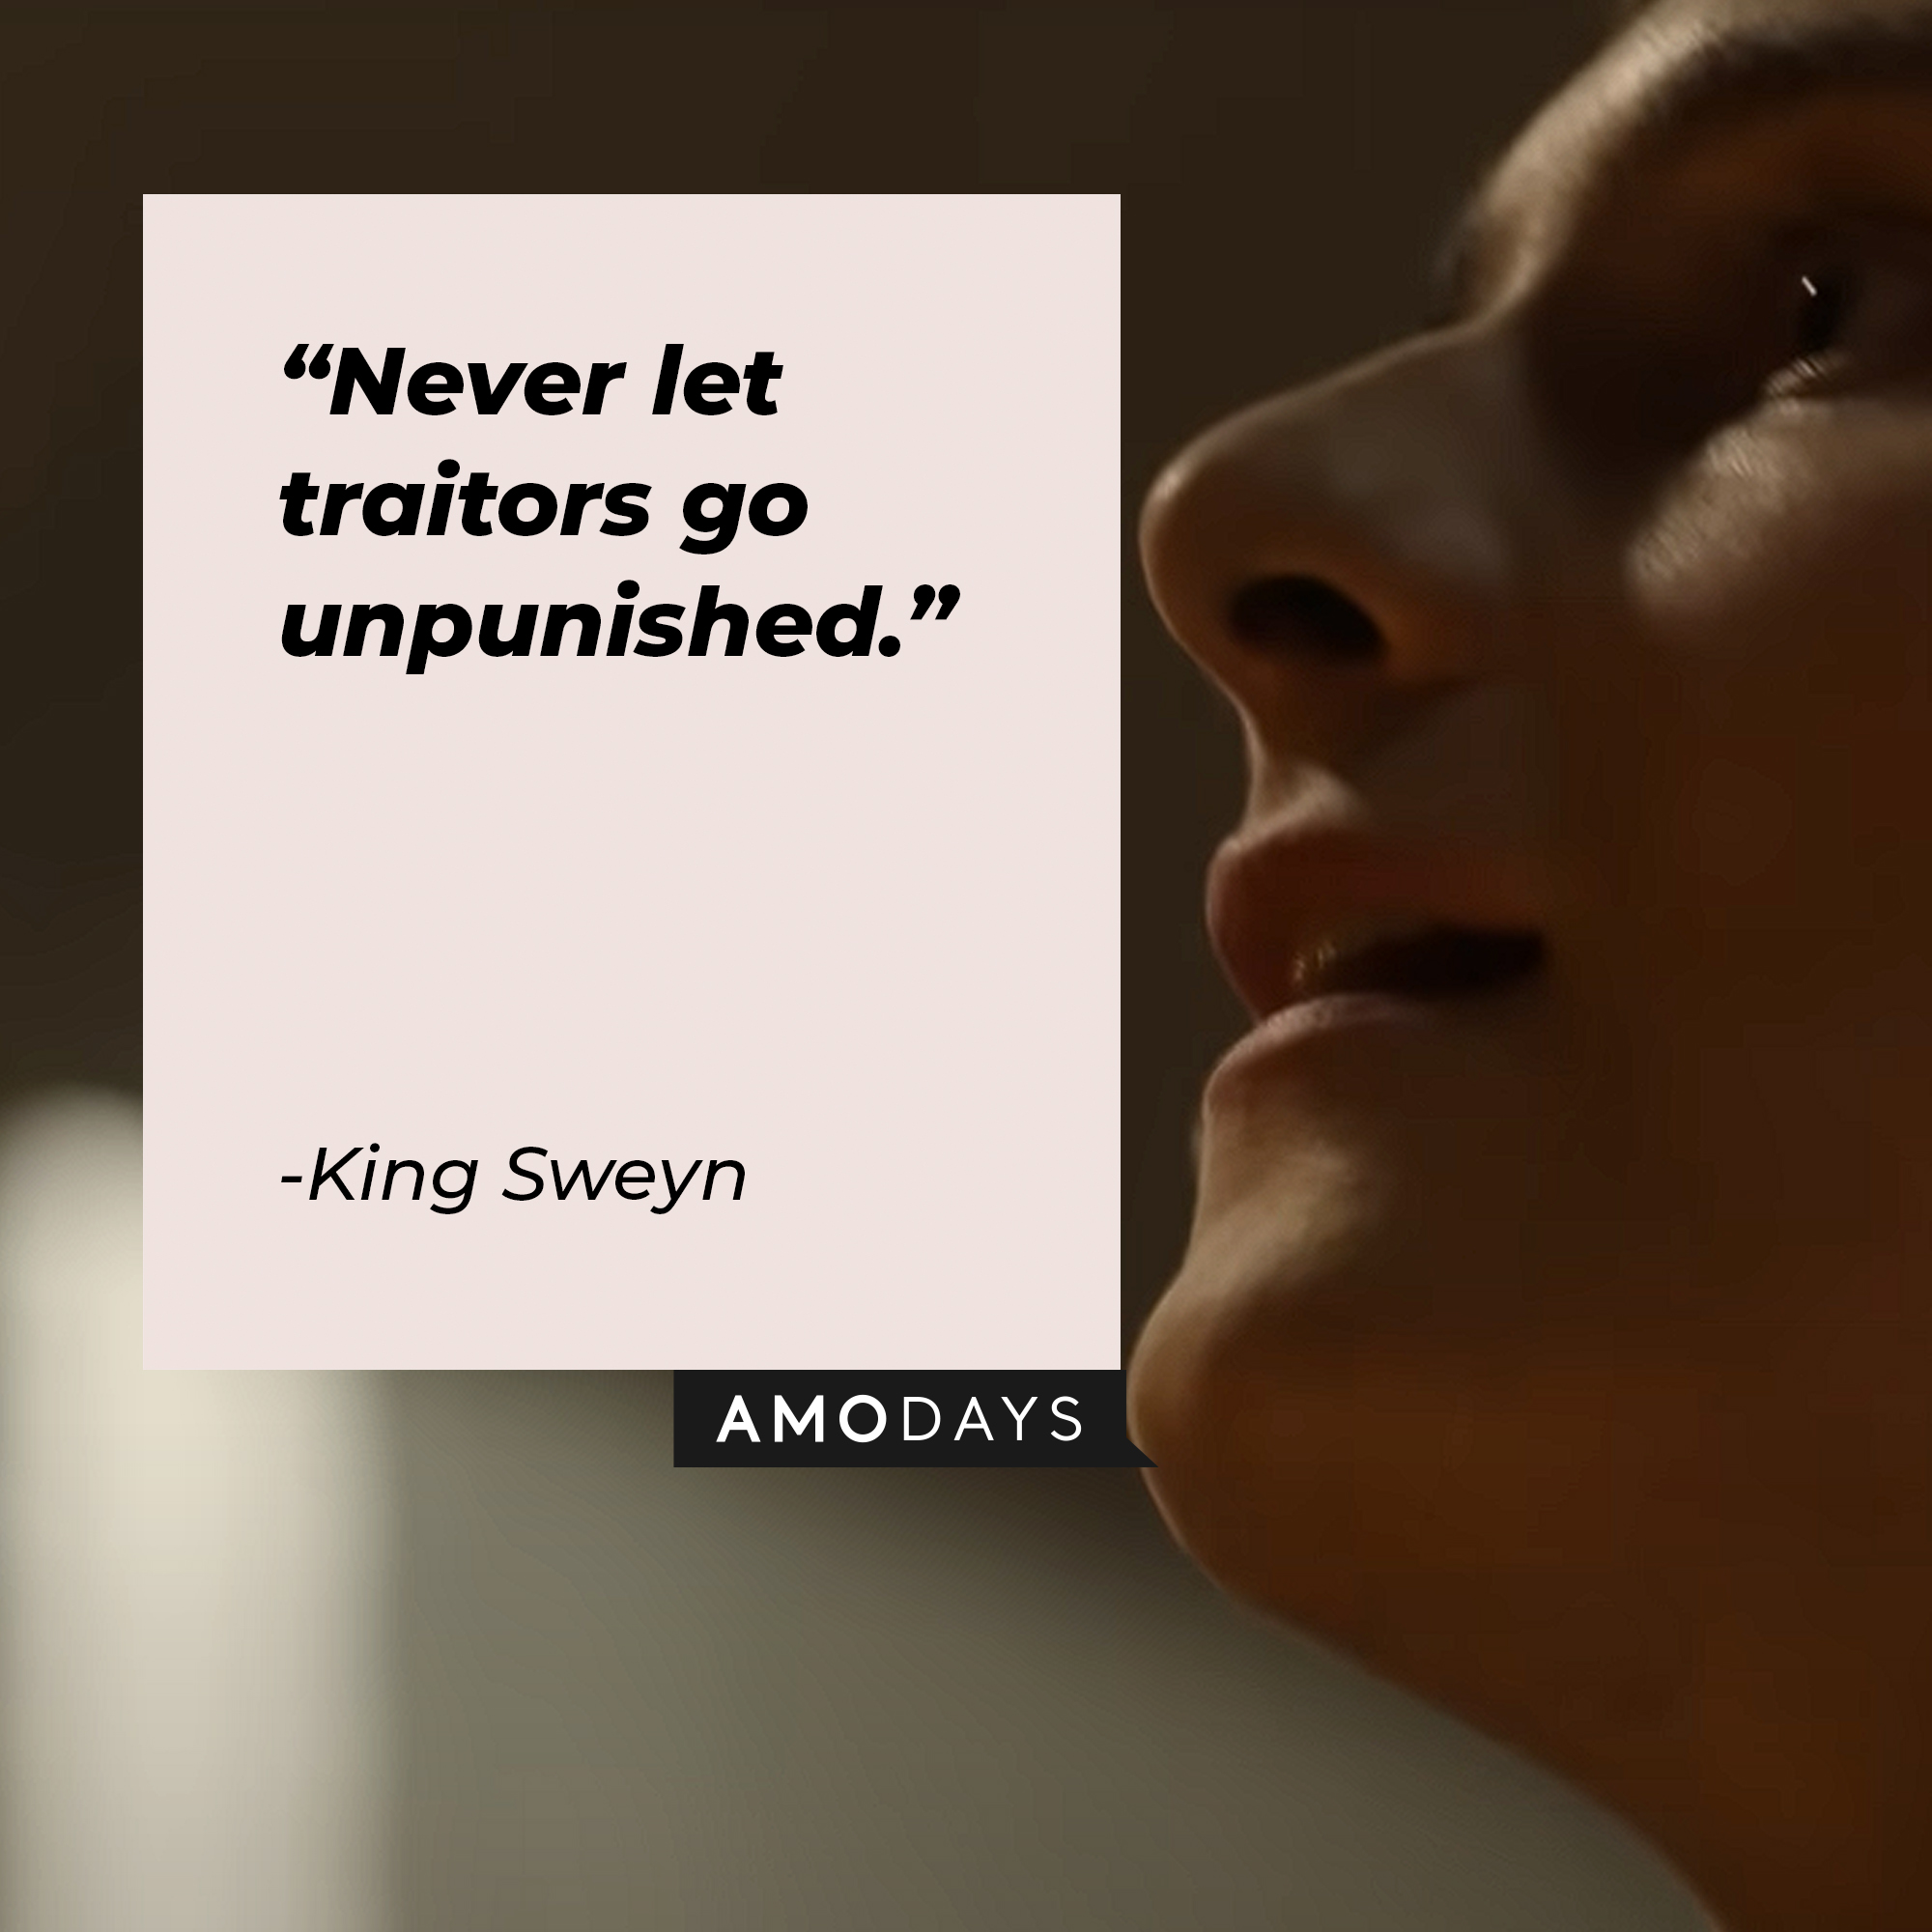 King Sweyn's quote: "Never let traitors go unpunished." | Image: youtube.com/Netflix